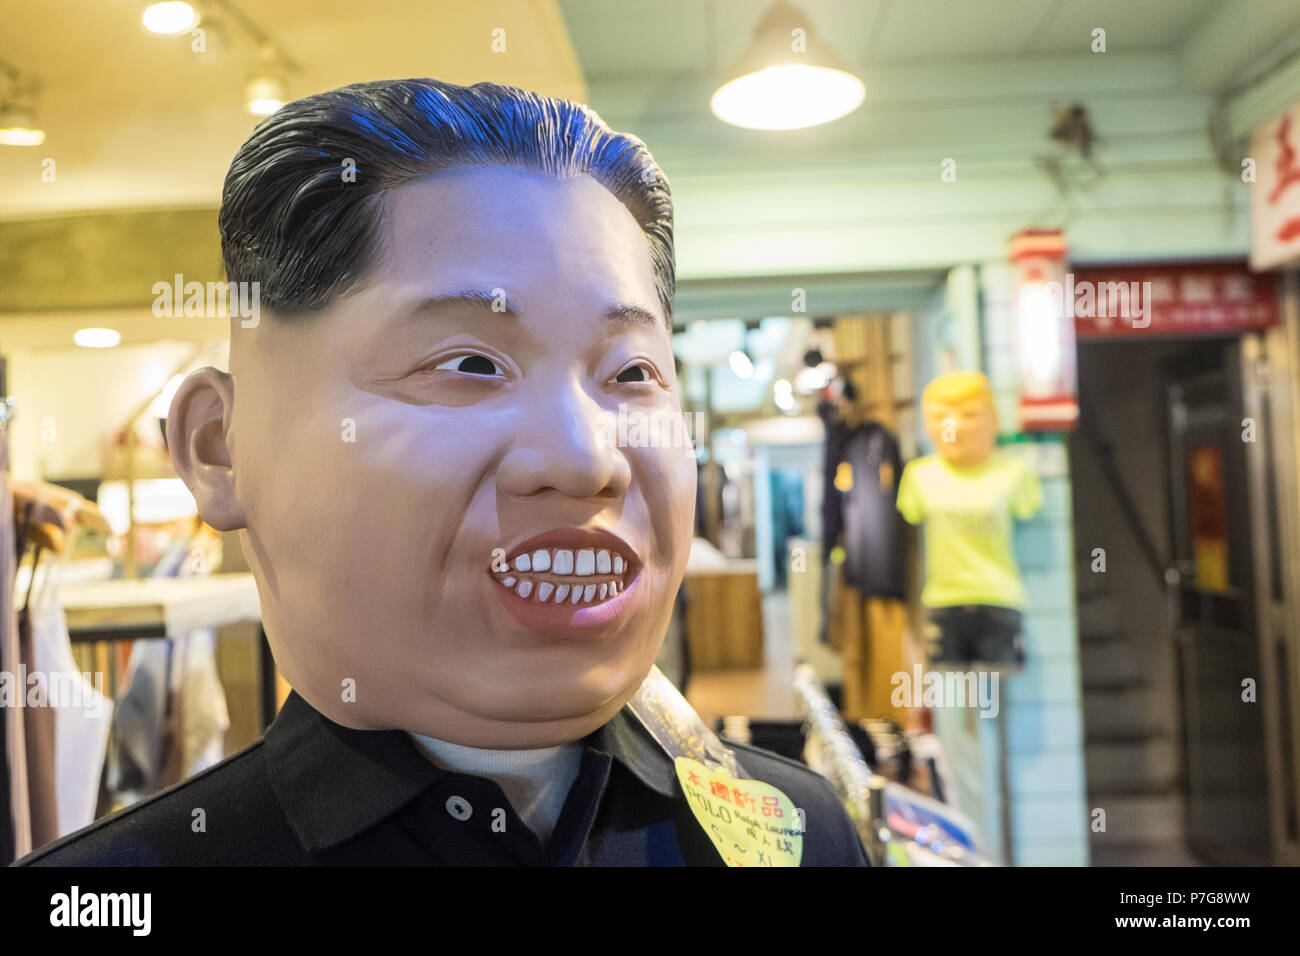 Kim Jong-Un,North Korea,Korean,leader,face,mask,at,Shilin,Market,clothing,shop,store,Taipei,Taiwan,China,Chinese,Republic  of China,ROC,Asia,Asian Stock Photo - Alamy